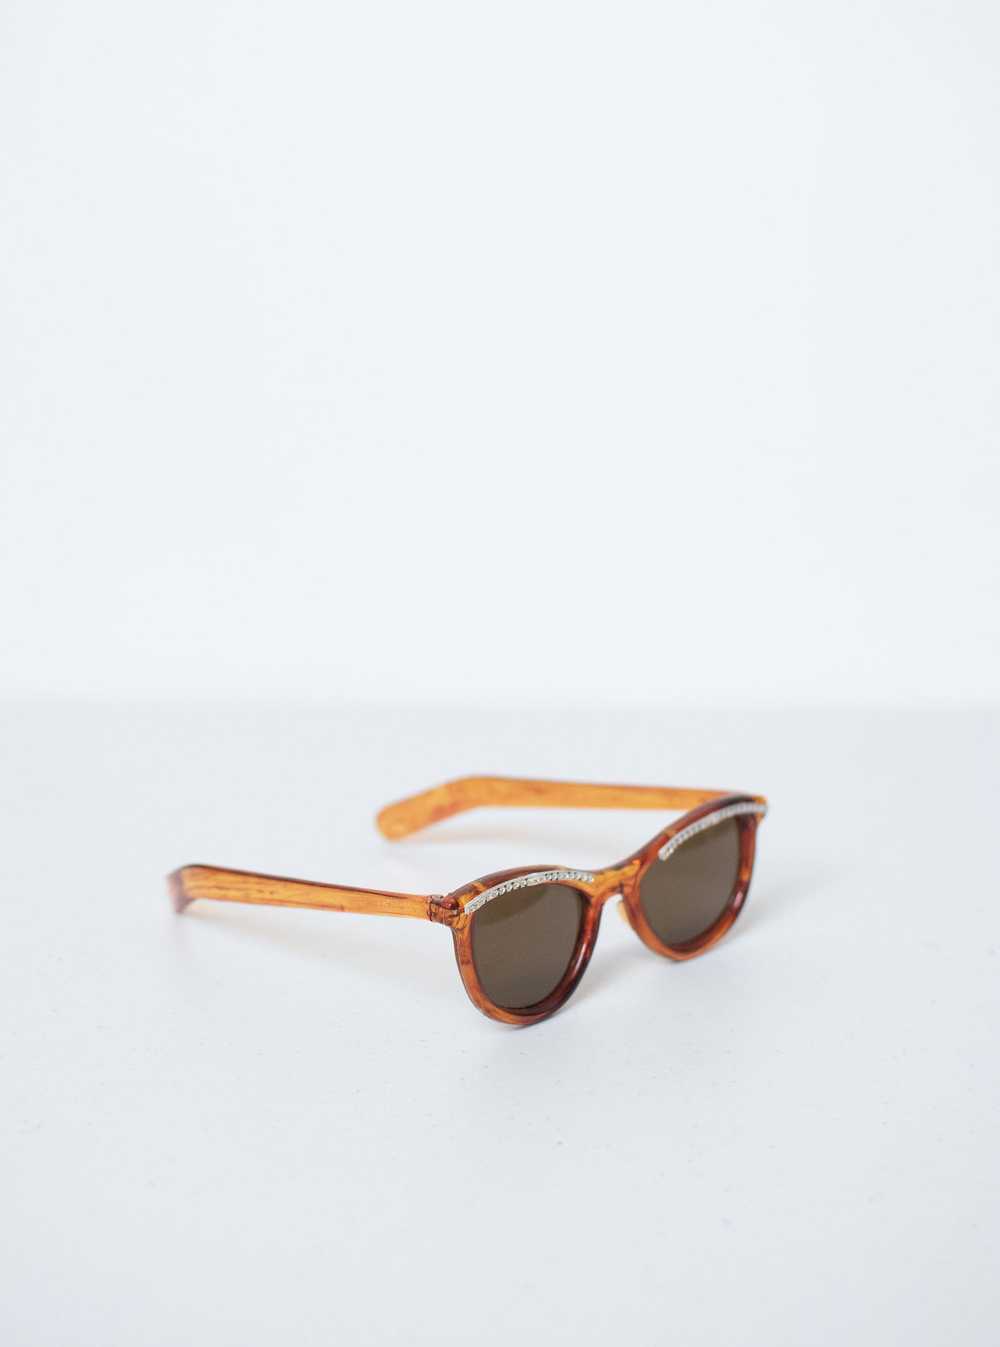 1950s Fosta Sunglasses | Amber - image 5